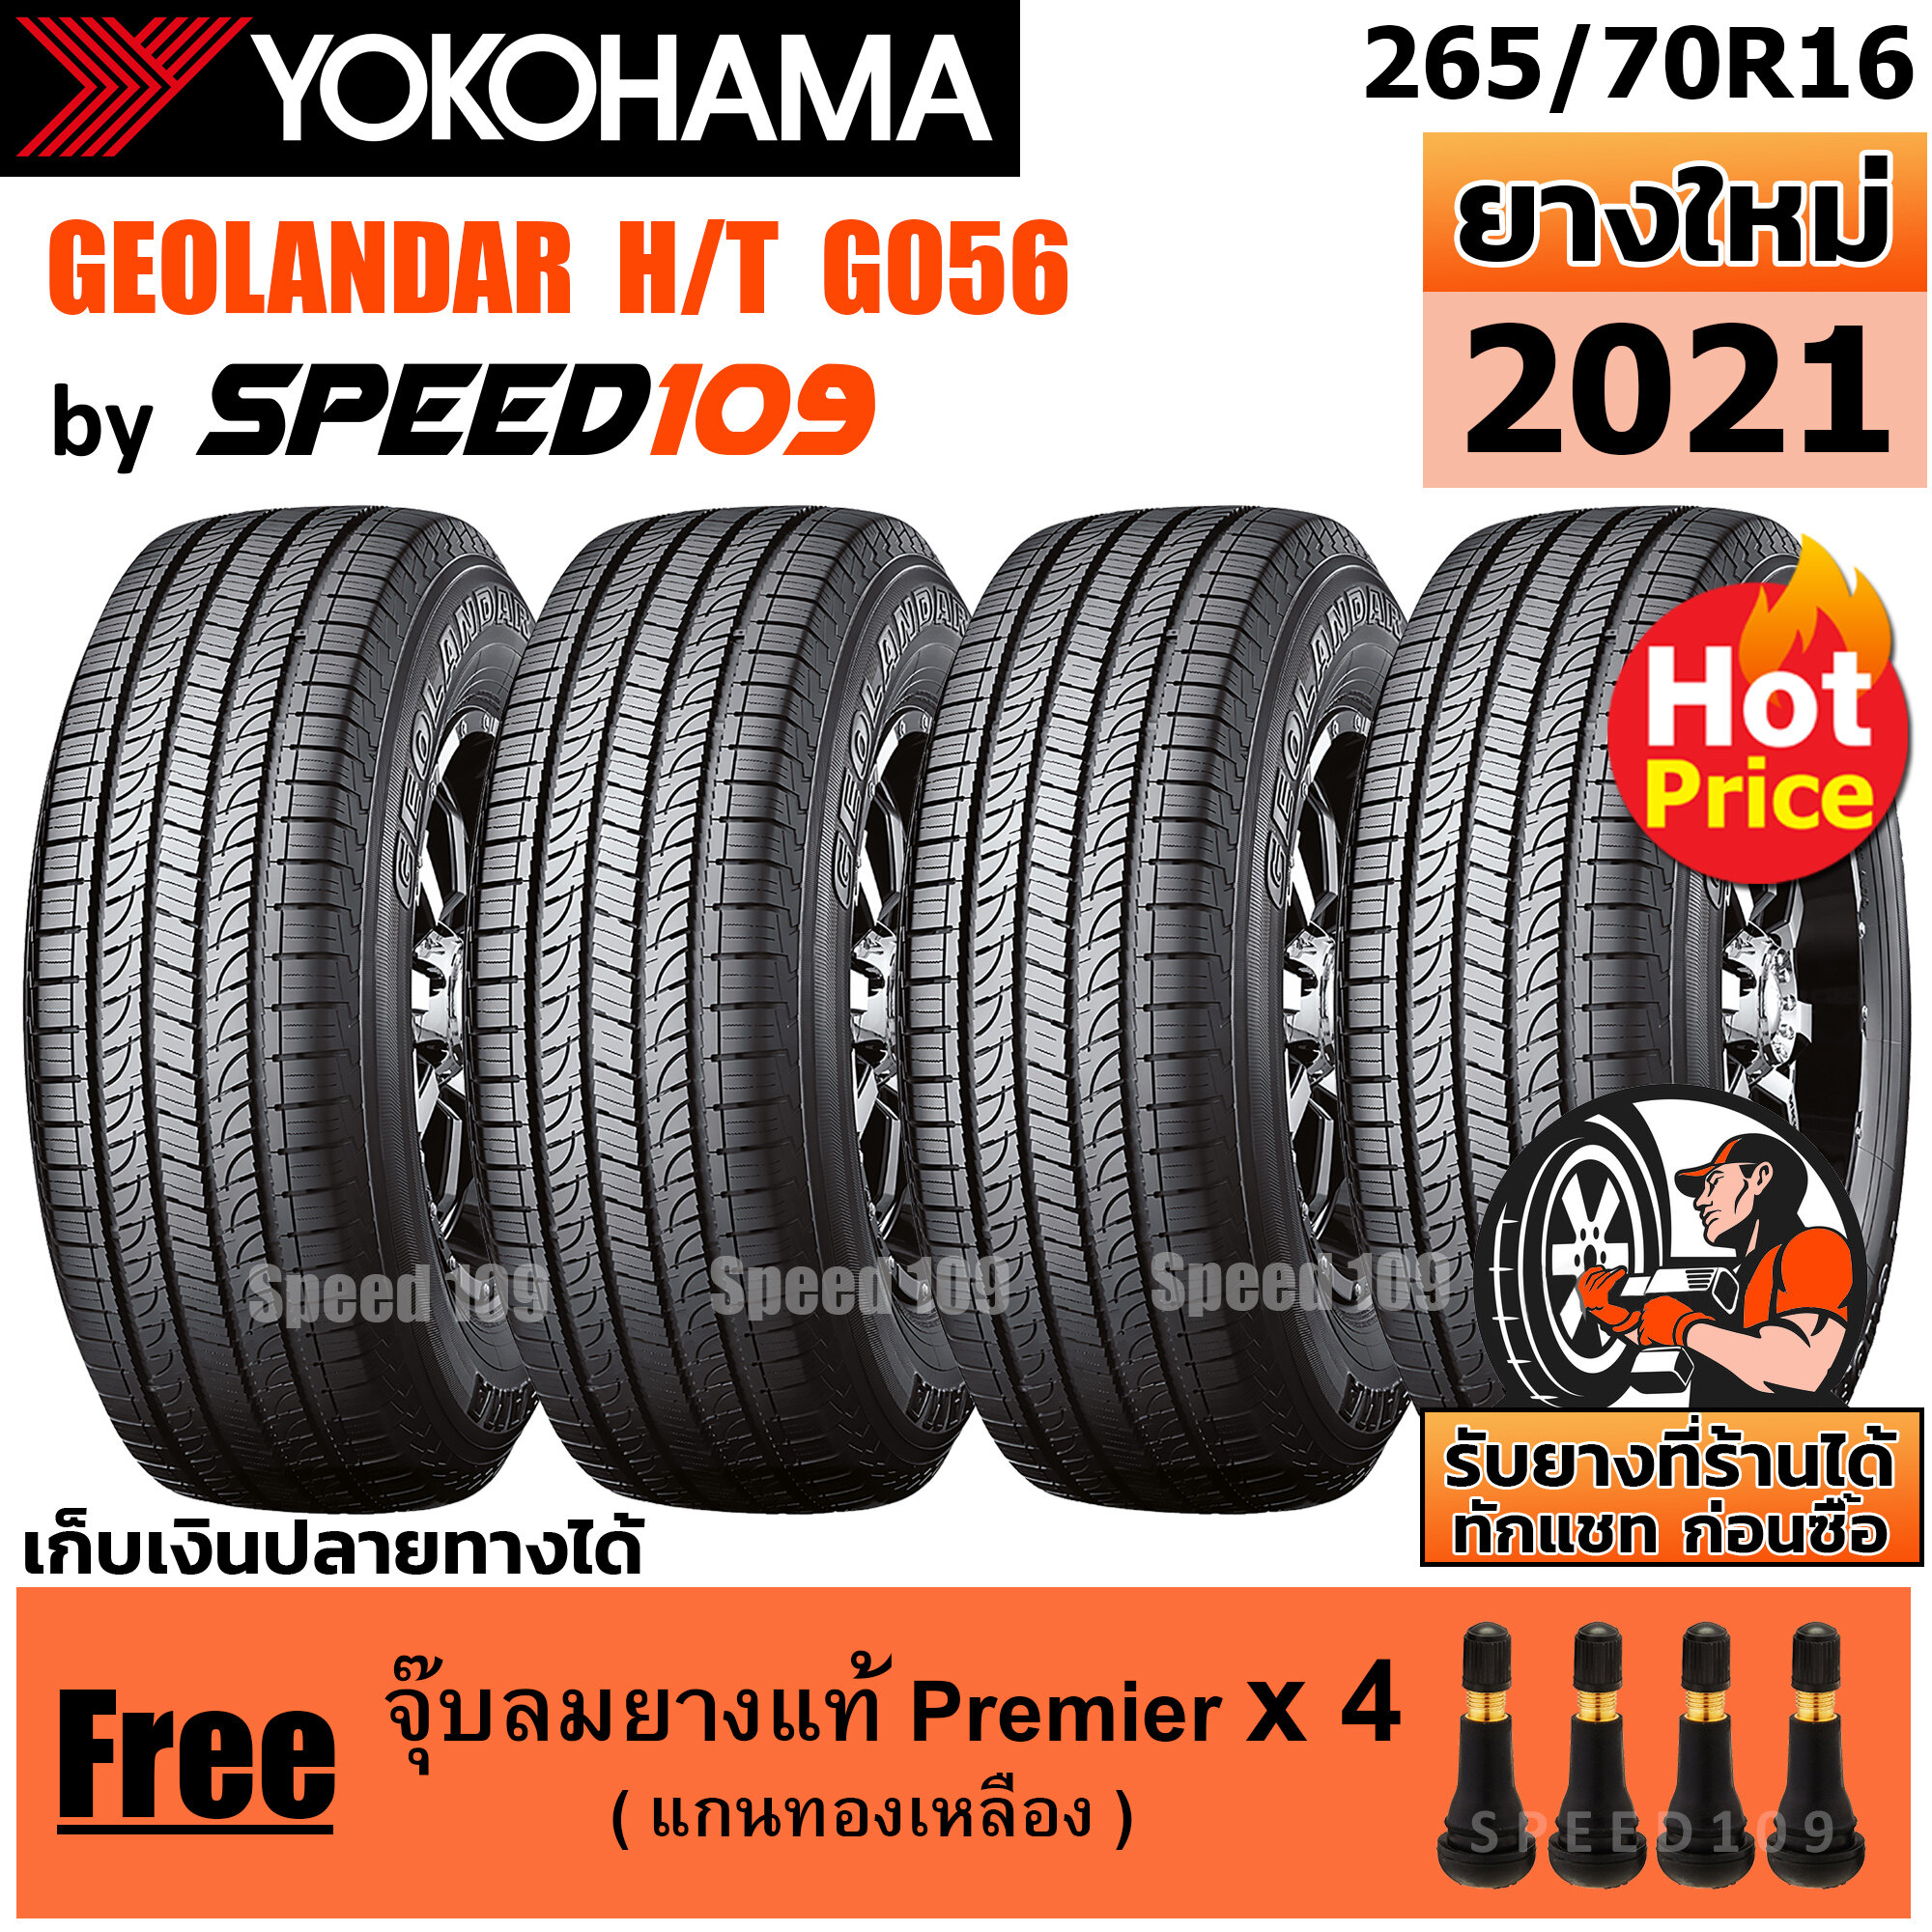 YOKOHAMA ยางรถยนต์ ขอบ 16 ขนาด 265/70R16 รุ่น GEOLANDAR H/T G056 - 4 เส้น (ปี 2021)